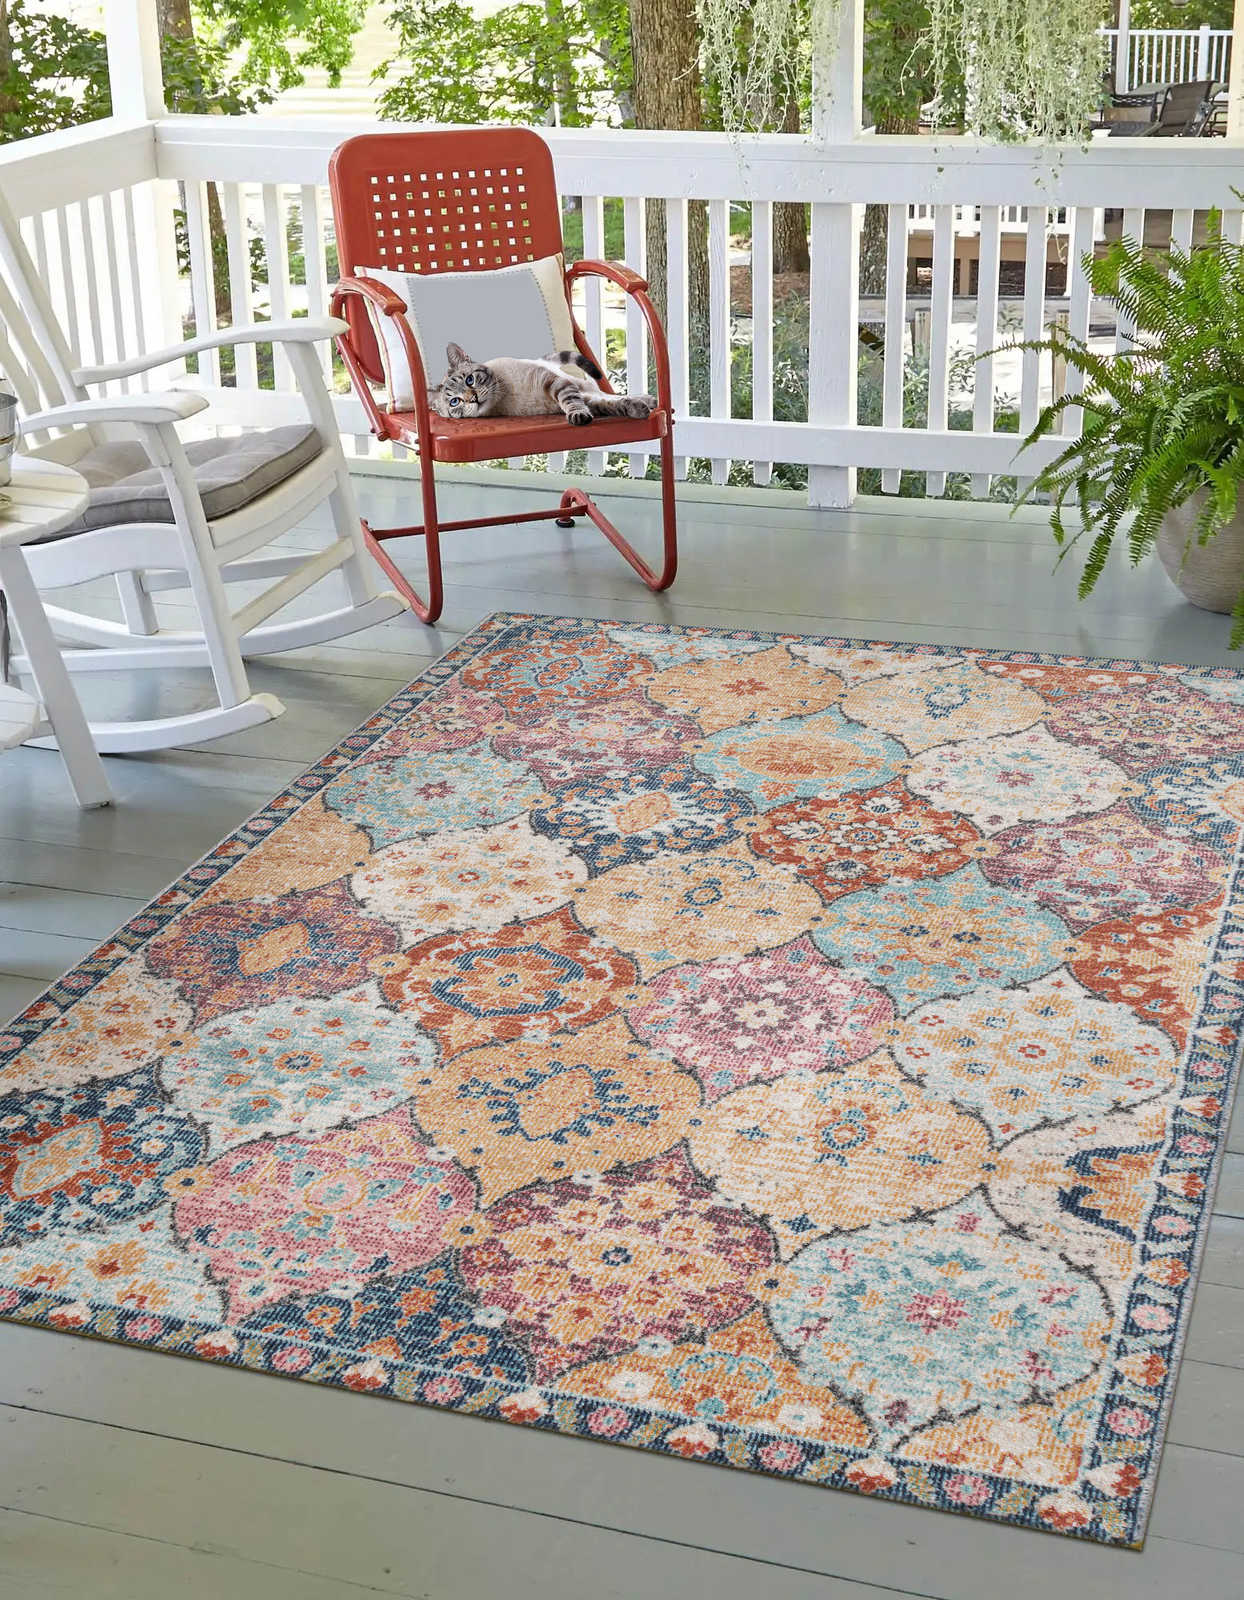         Bunter Outdoor Teppich aus Flachgewebe – 150 x 80 cm
    